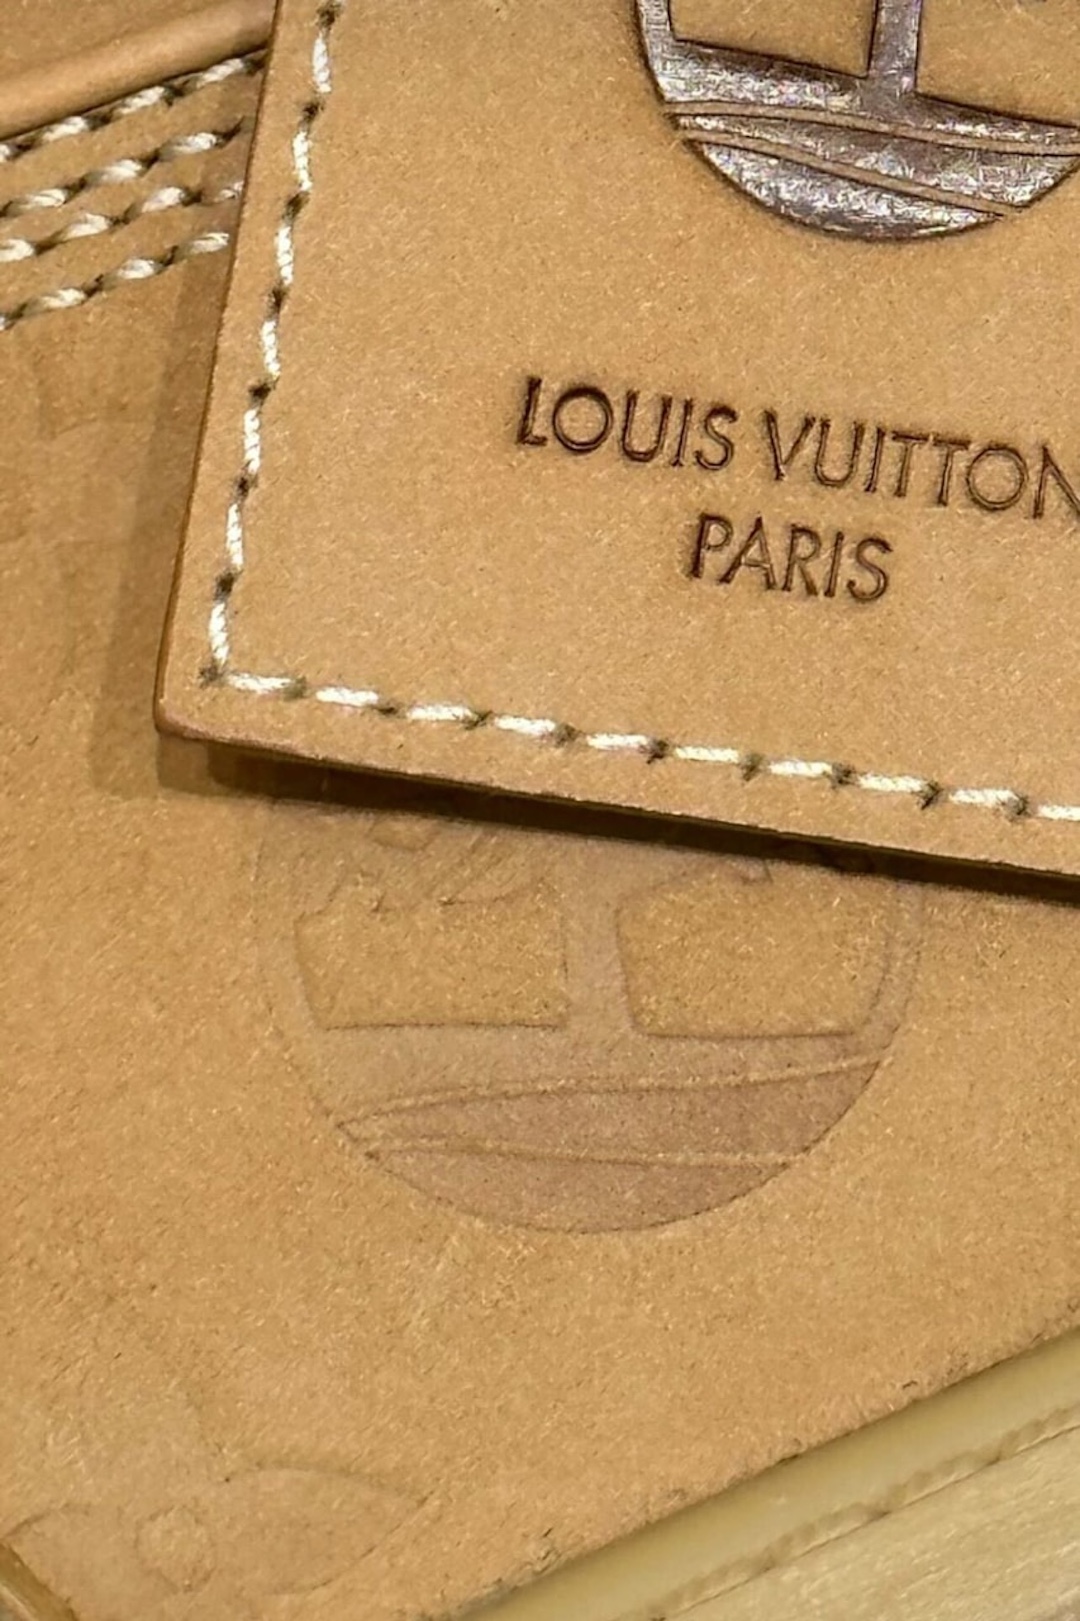 Louis Vuitton Timberland 6 Inch Boot 1